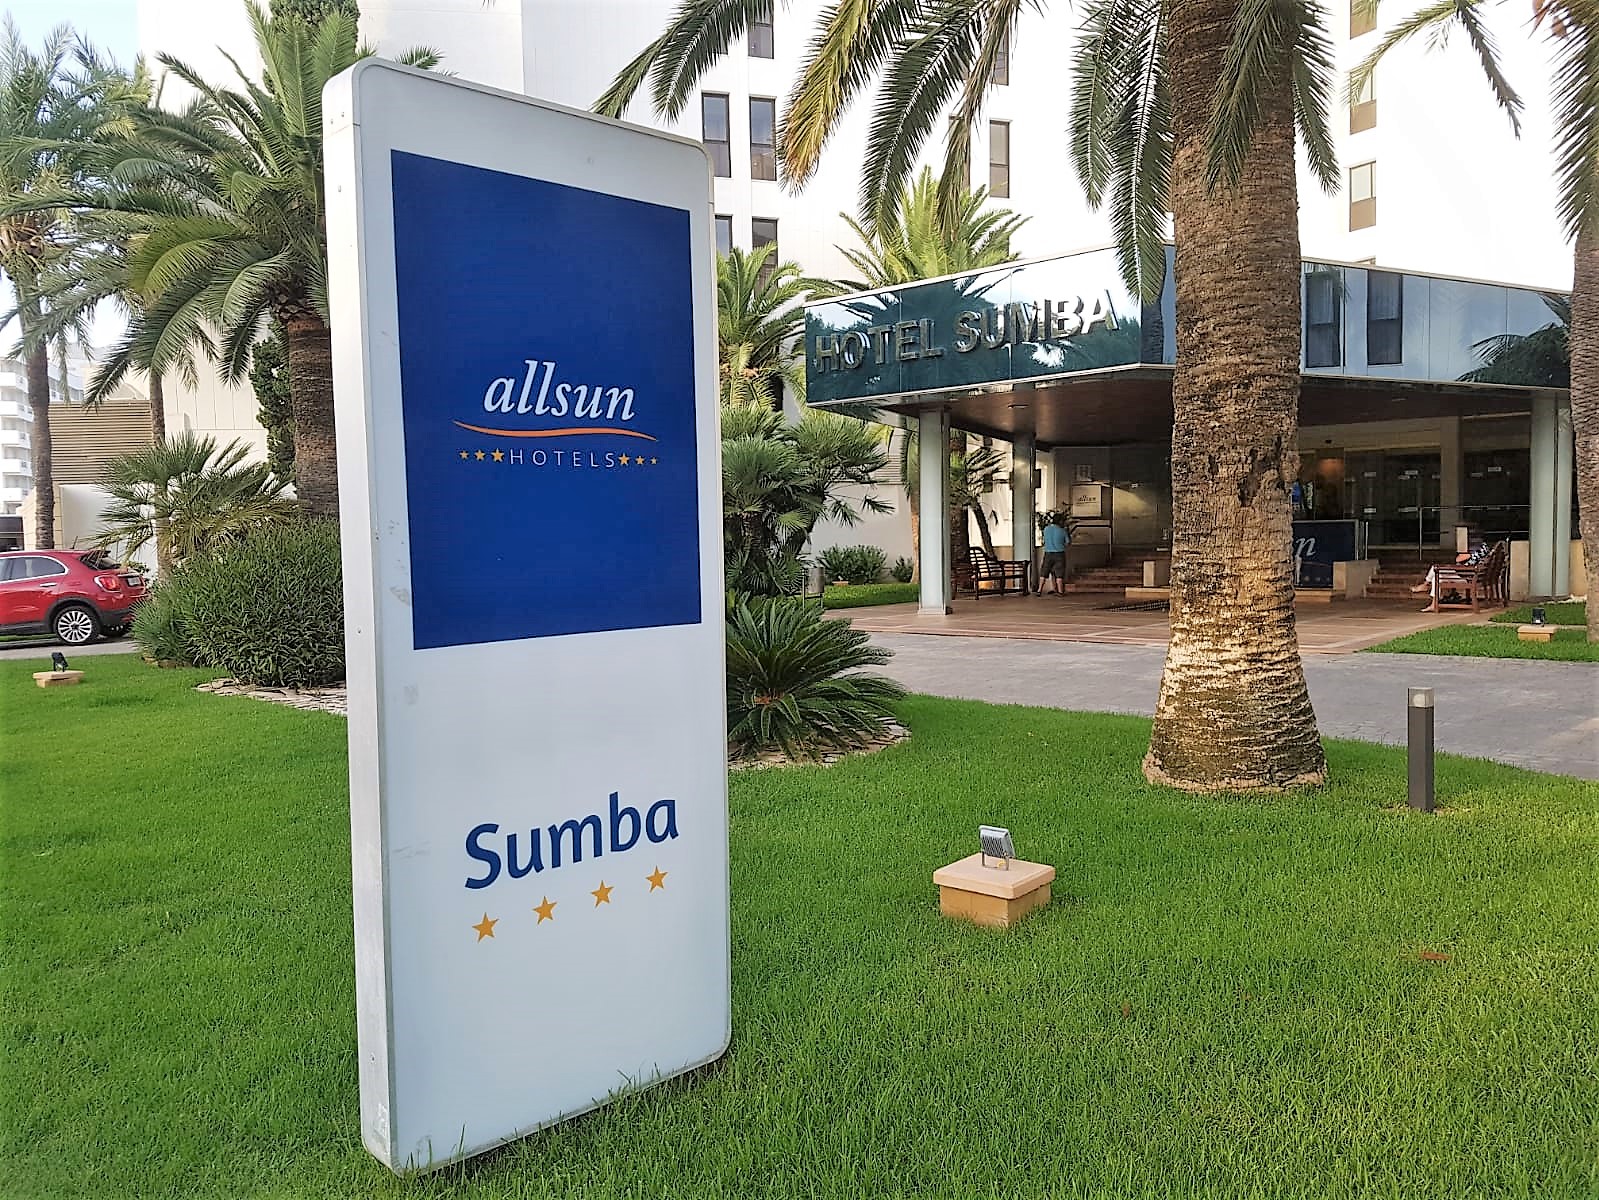 Allsun Hotel Sumba